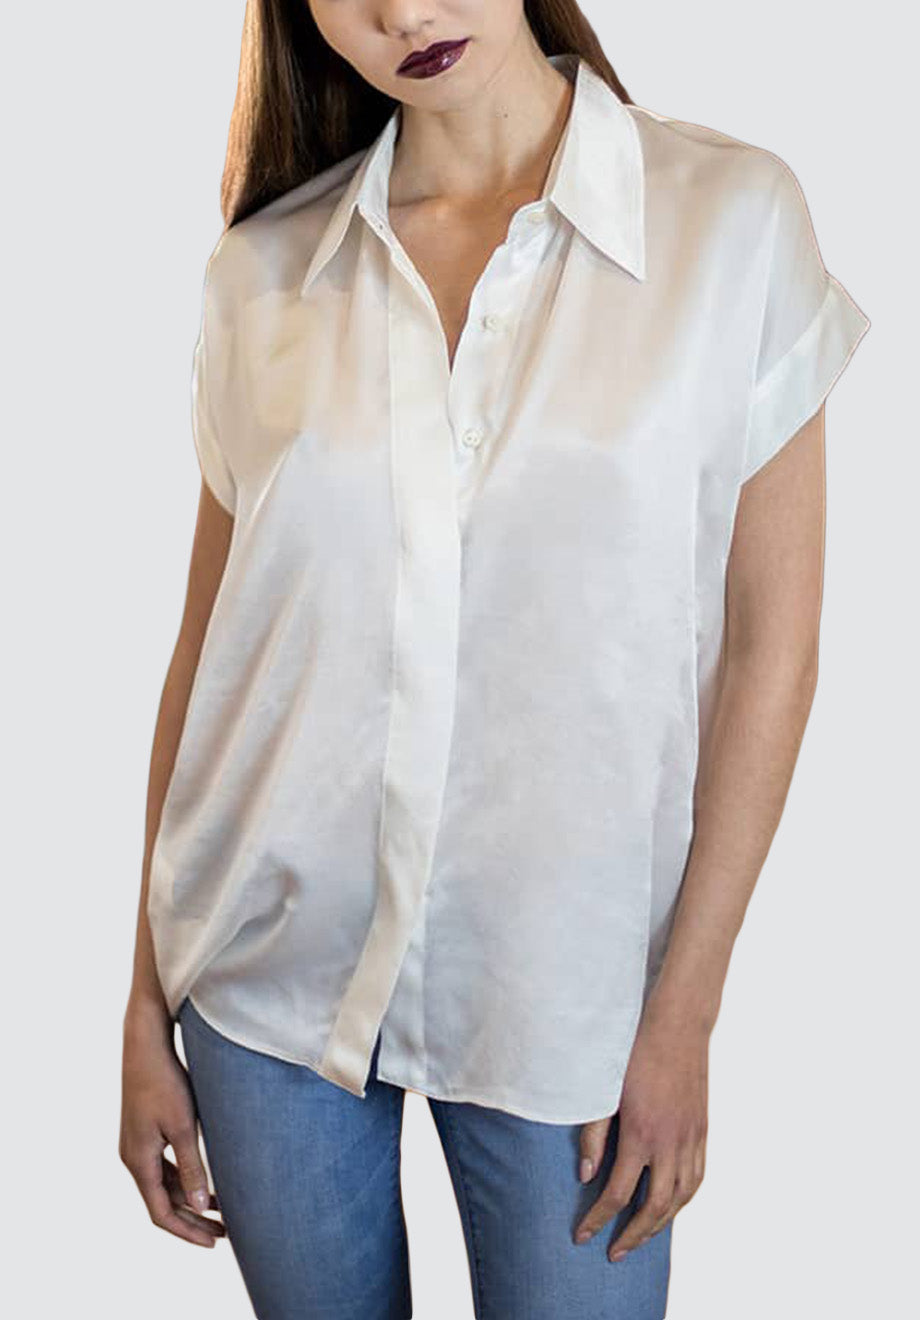 100% Pure Silk White Shirt